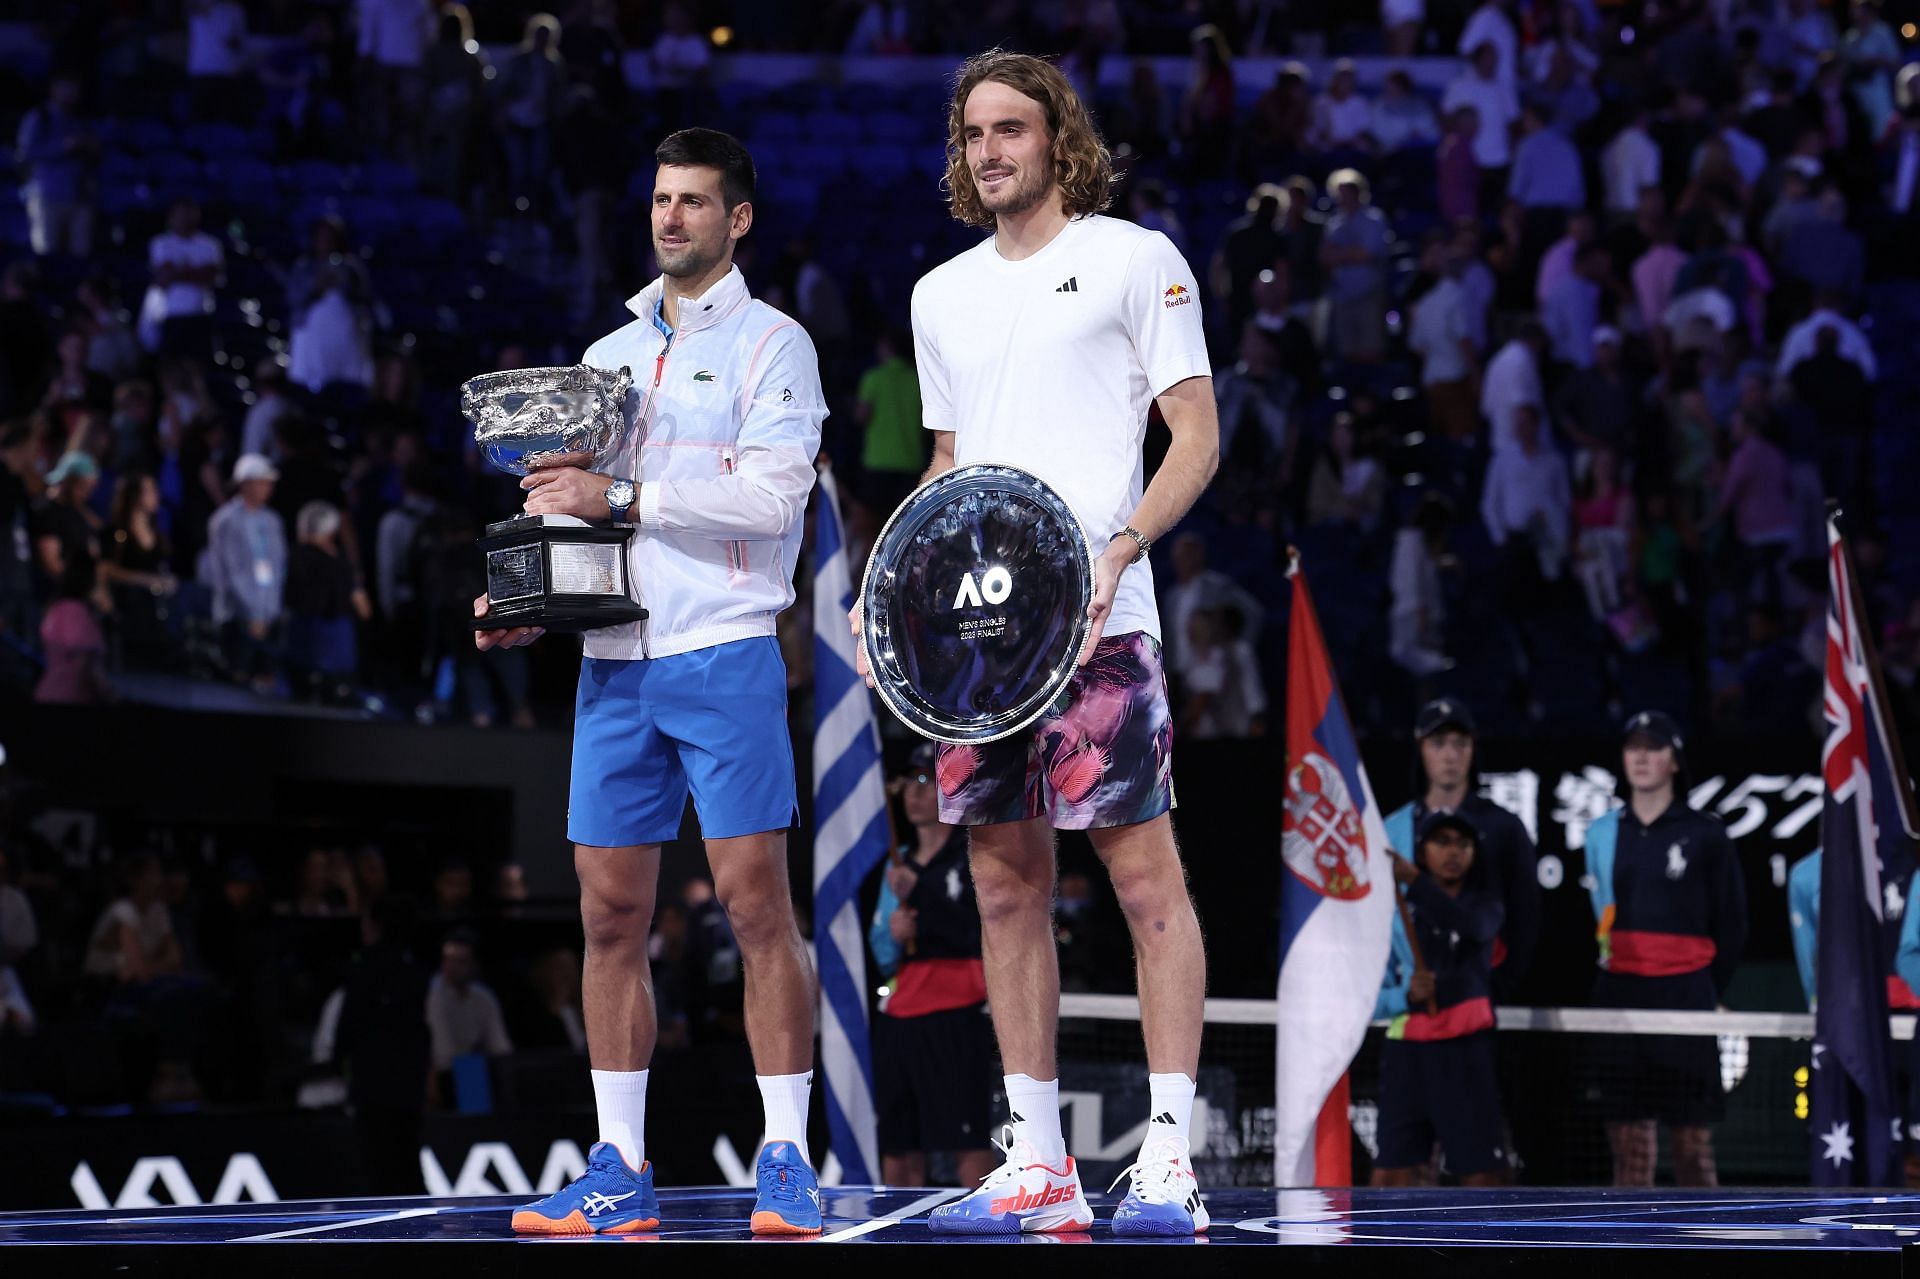 Djokovic won his tenth title.